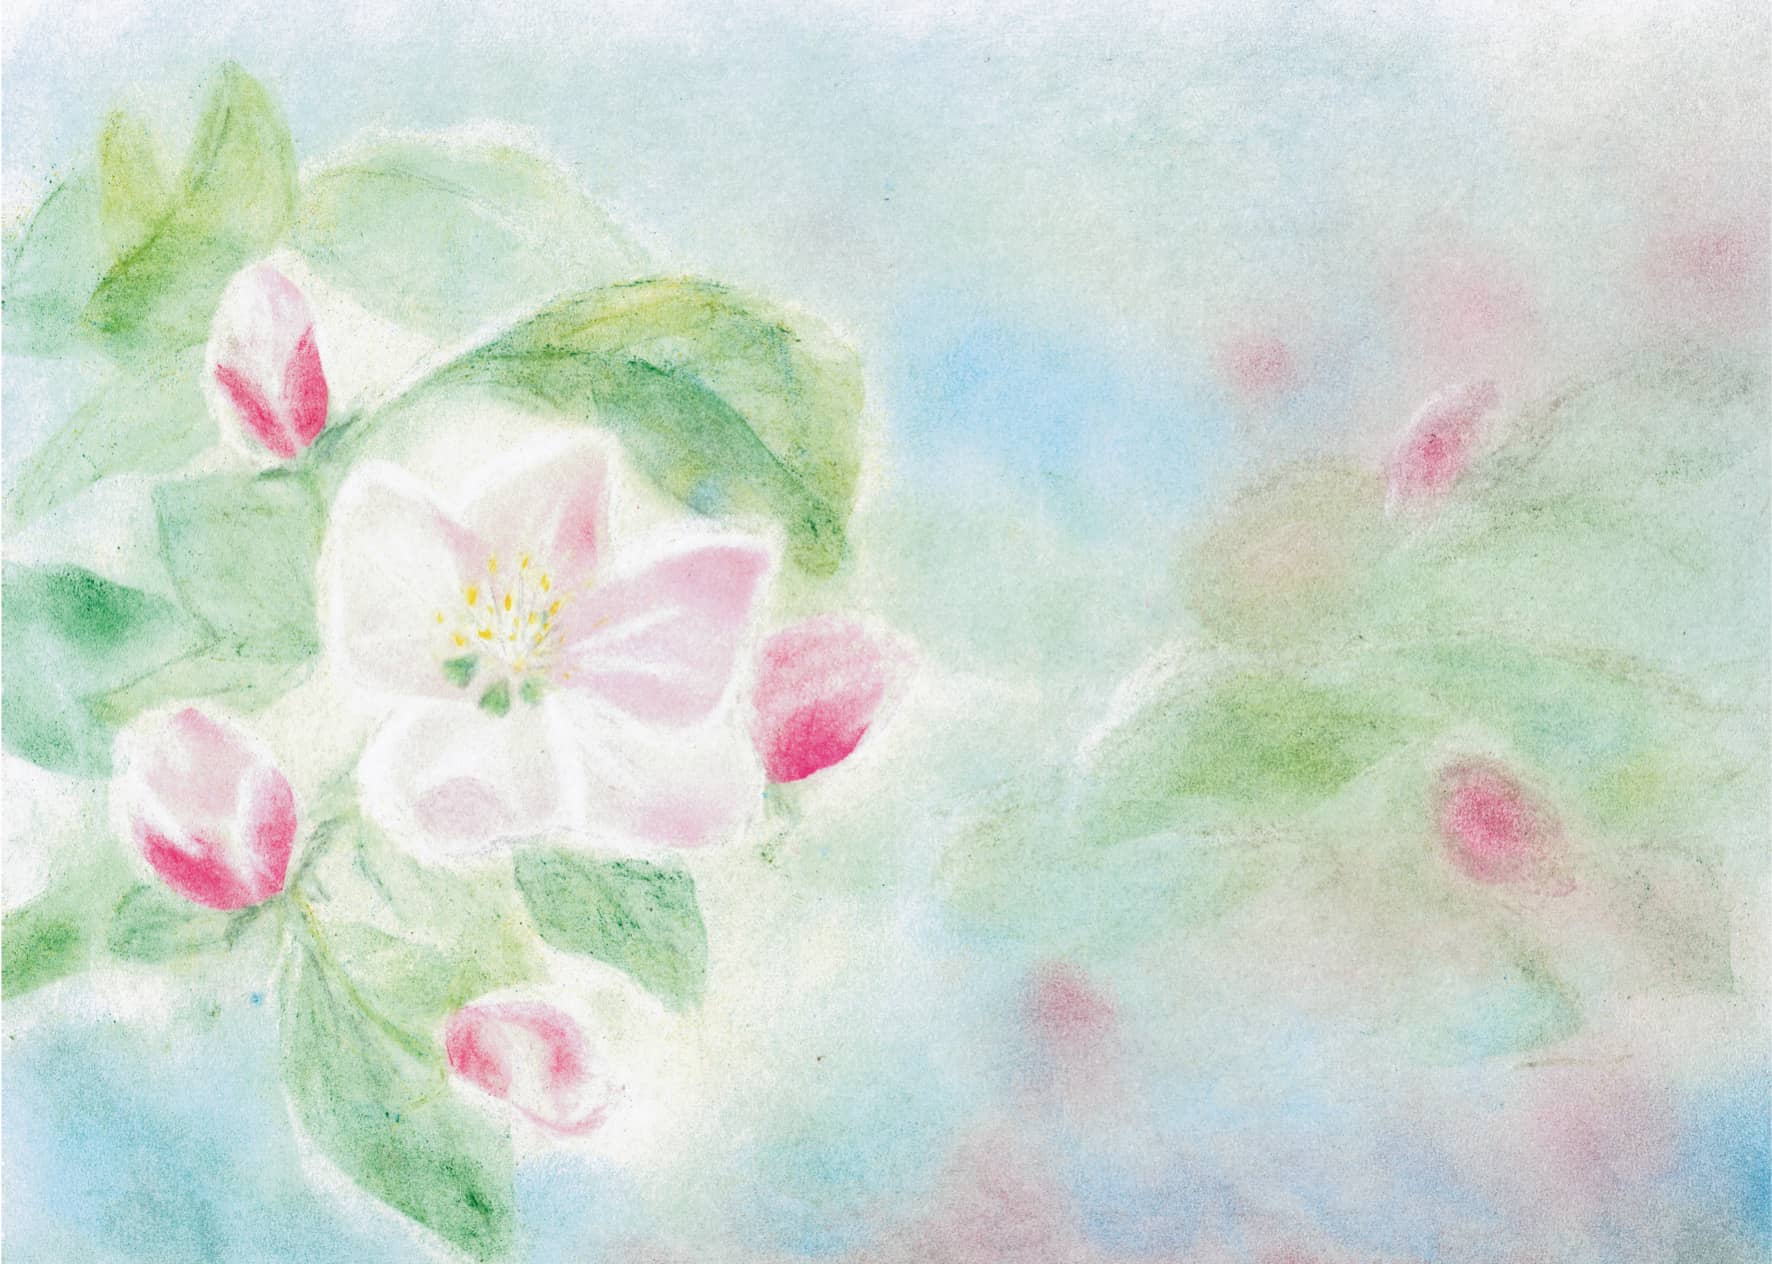 Seccorell Postkarte "Apfelblüte", zarte Farbabstufungen in Aquarell-Optik, ideal für Frühlingsgrüße.